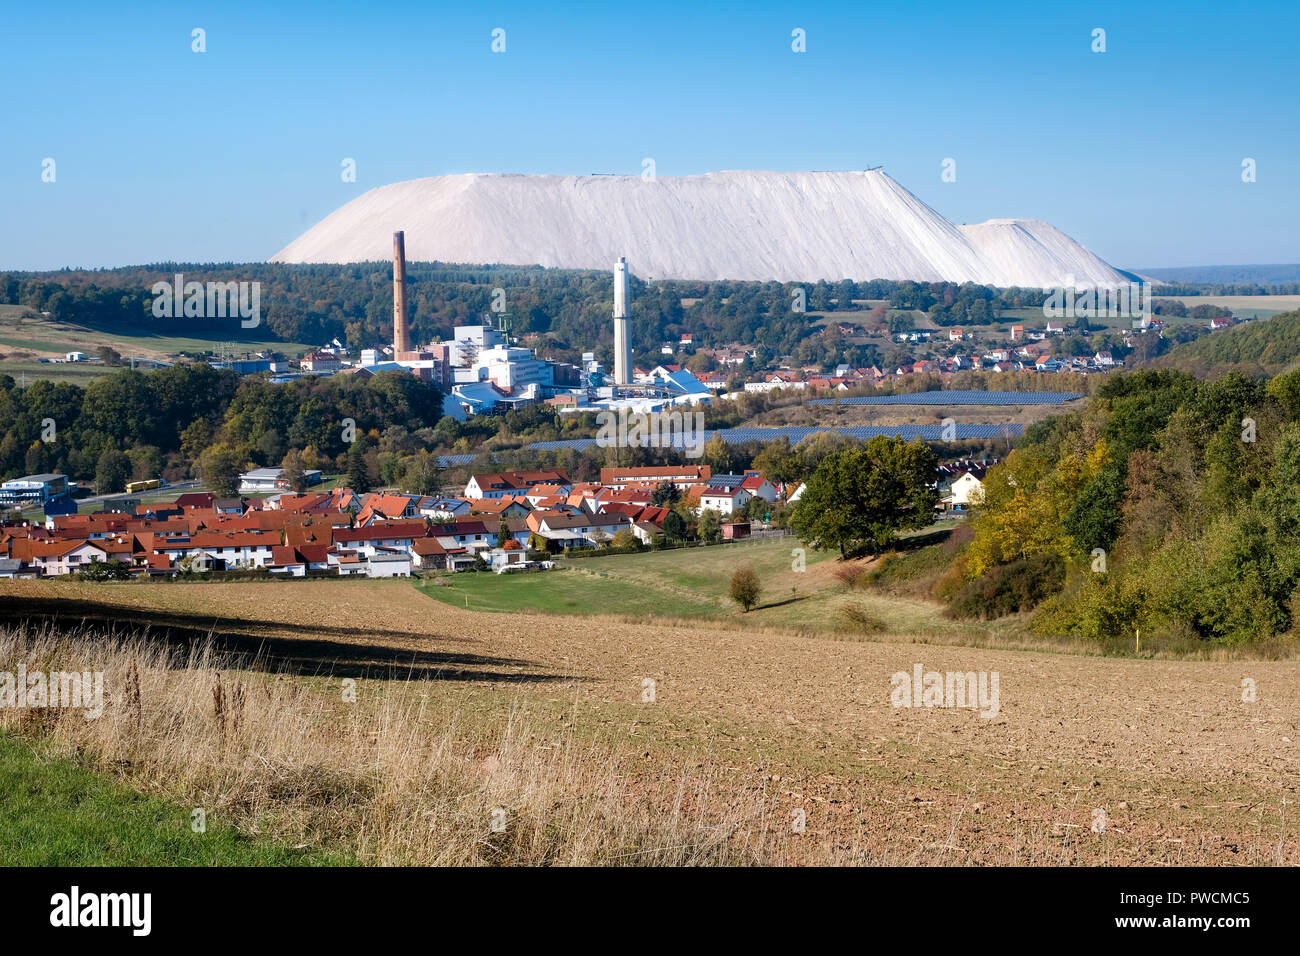 Potash plant and waste dump of the company K + S KALI GmbH, Werra plant, location Unterbreizbach, Thuringia, Germany, 14.10.2018 Stock Photo